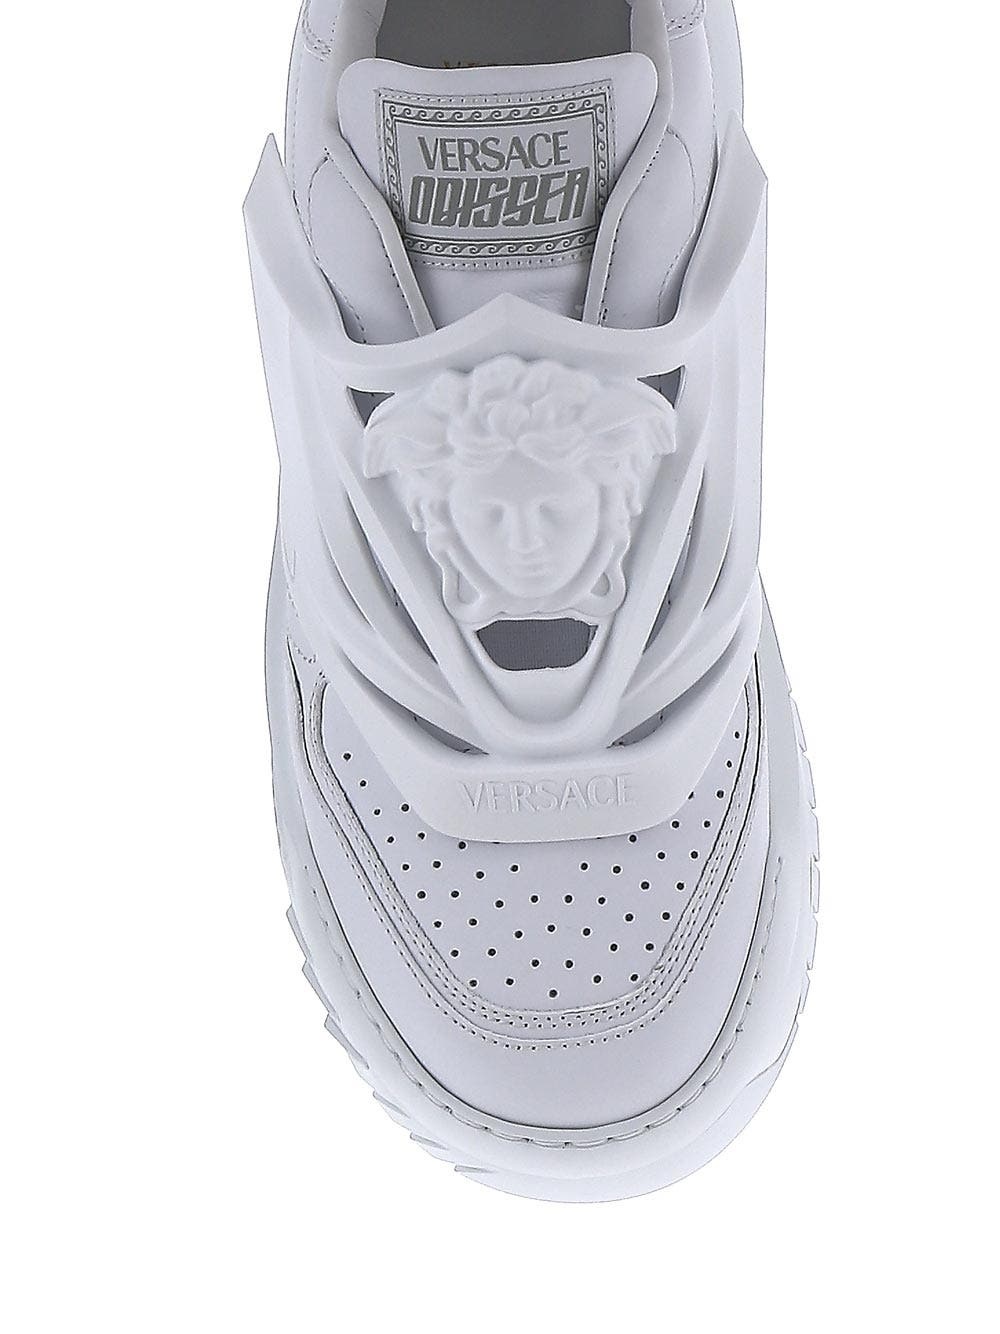 Versace Odyssey Sneaker 41.5 IT at FORZIERI